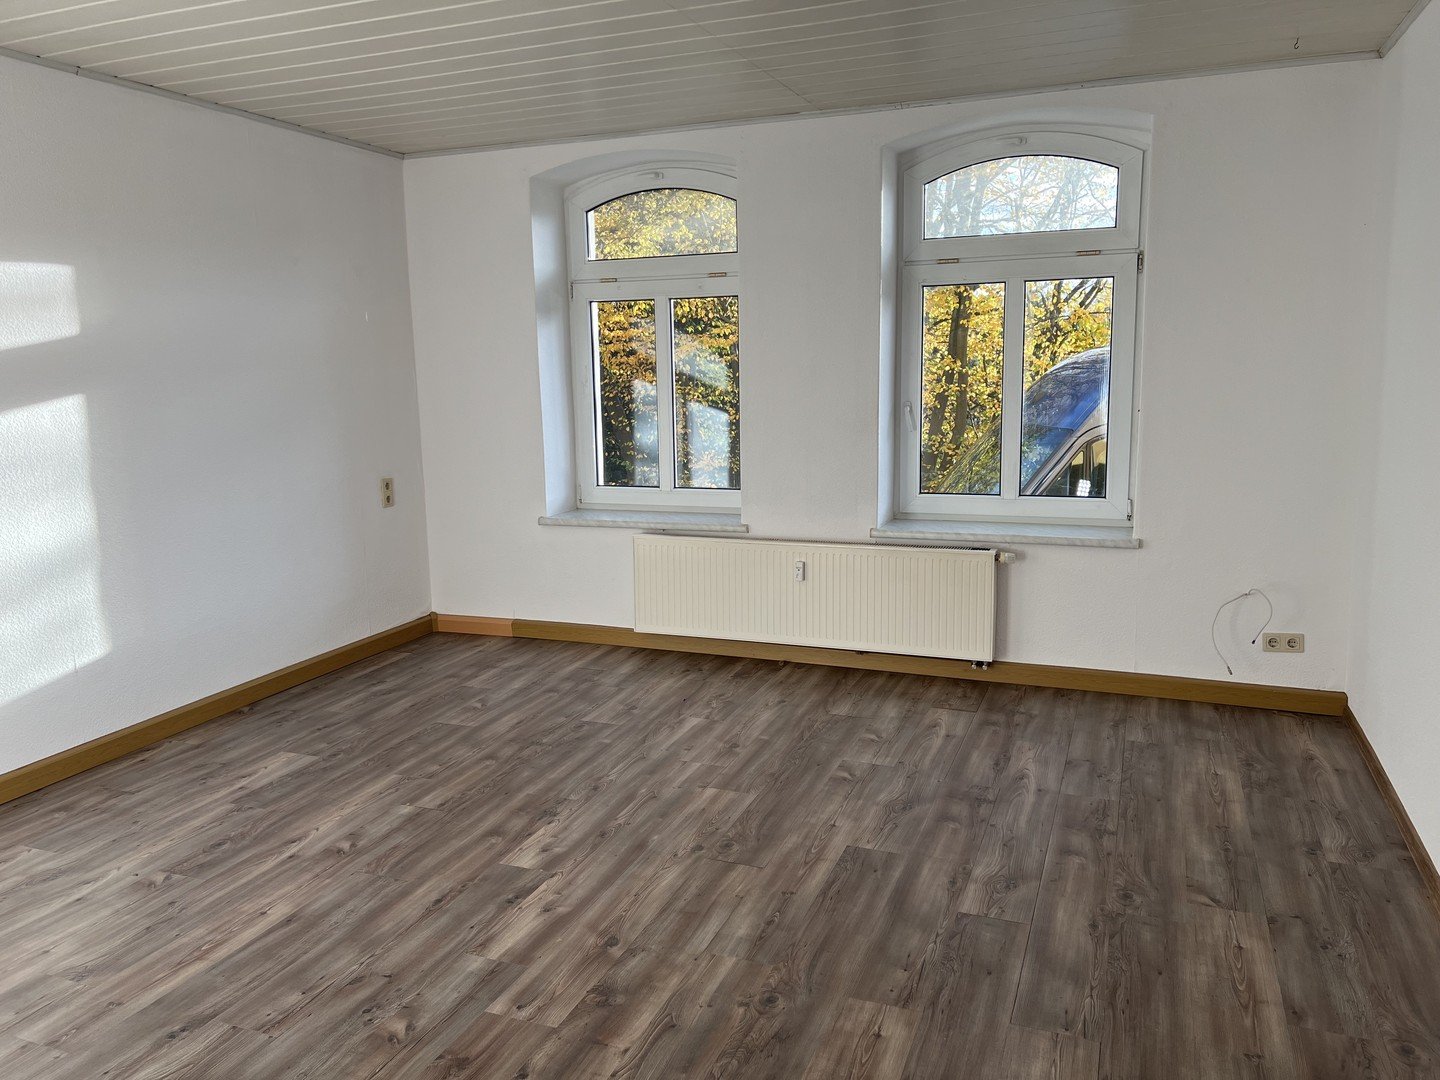 2 Raum Wohnung in Neusalza- Spremberg